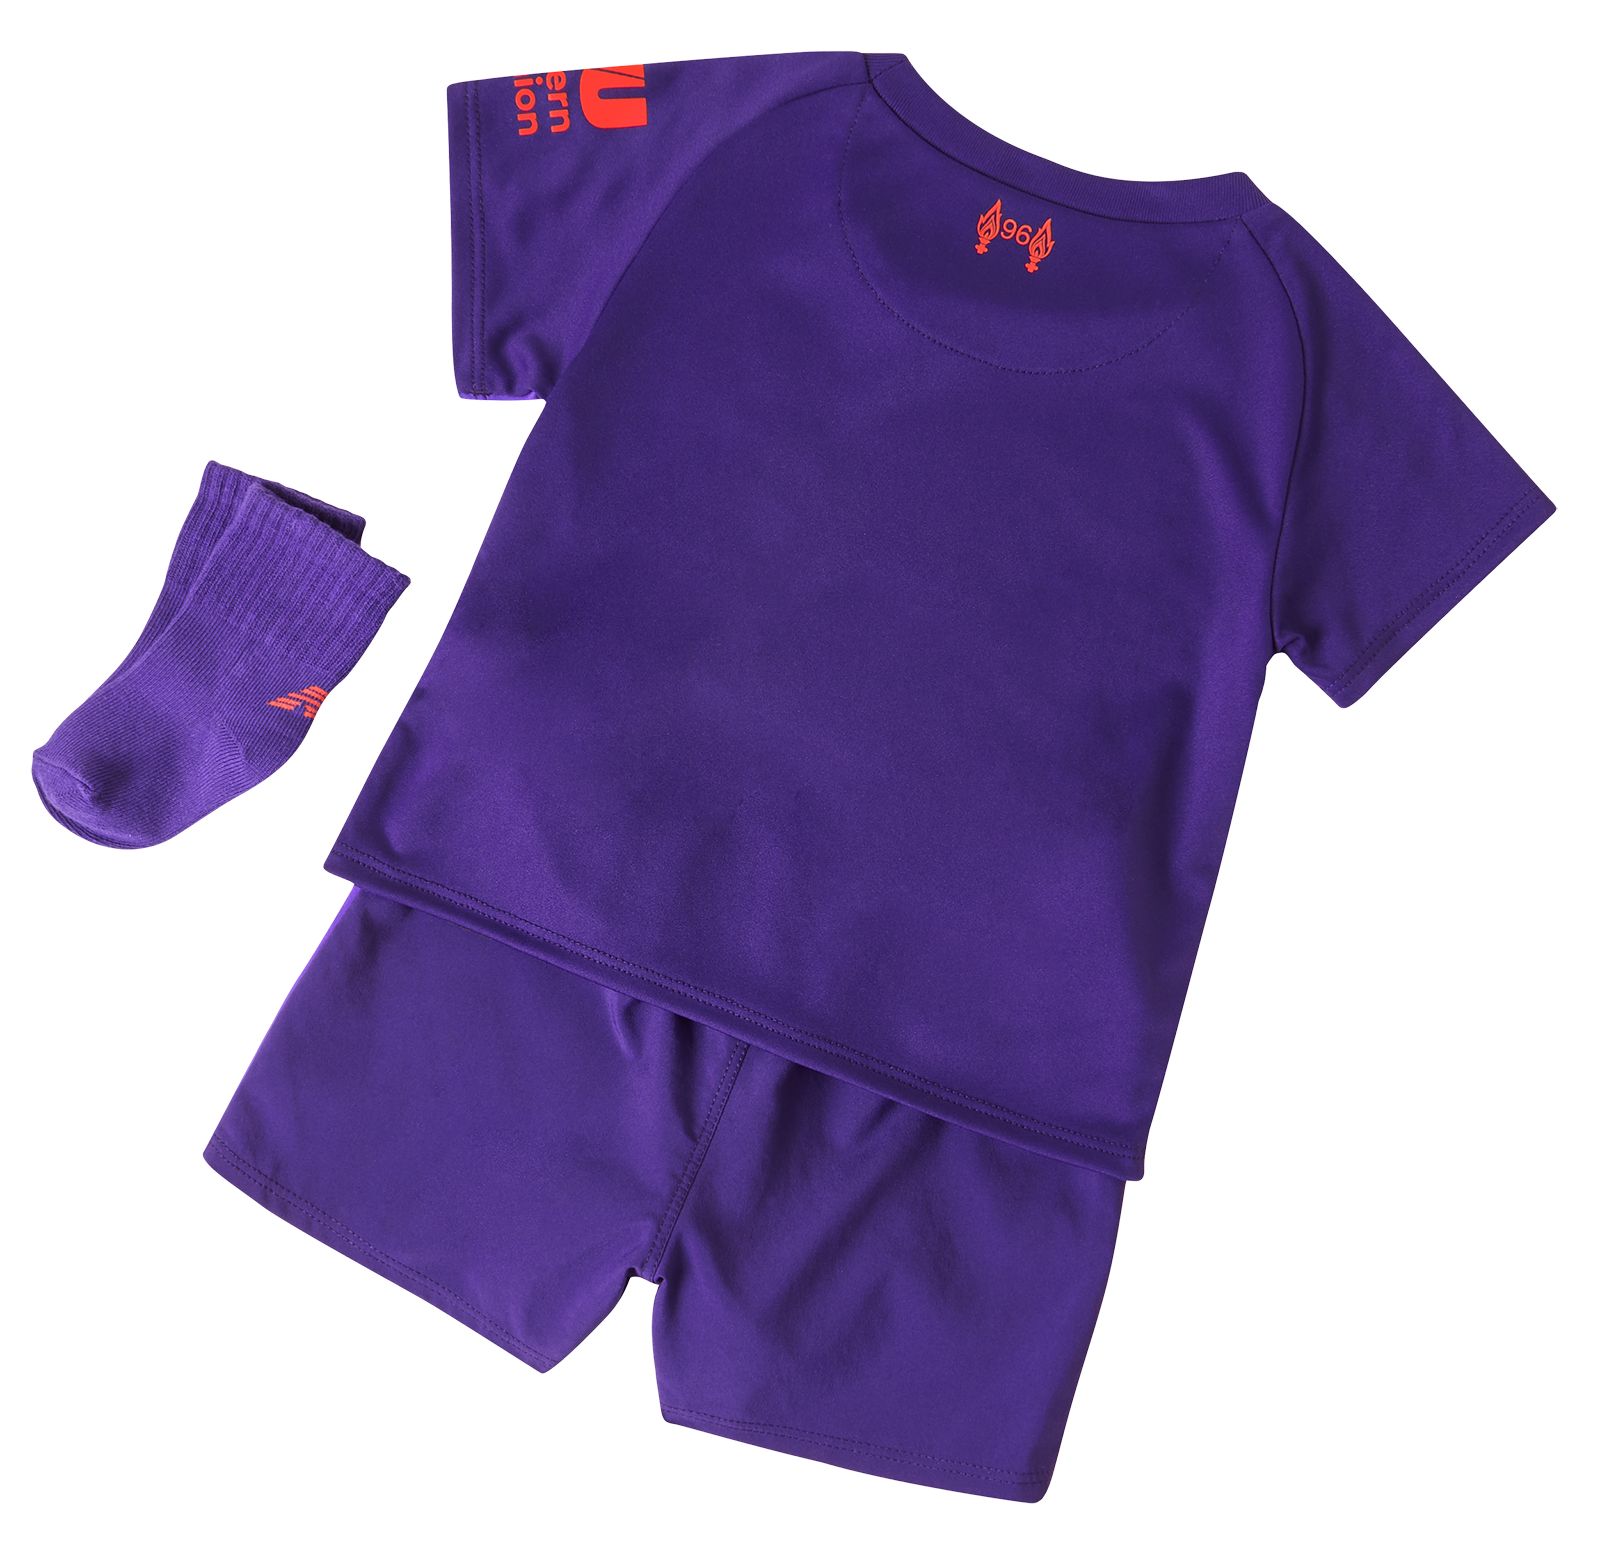 lfc purple shirt